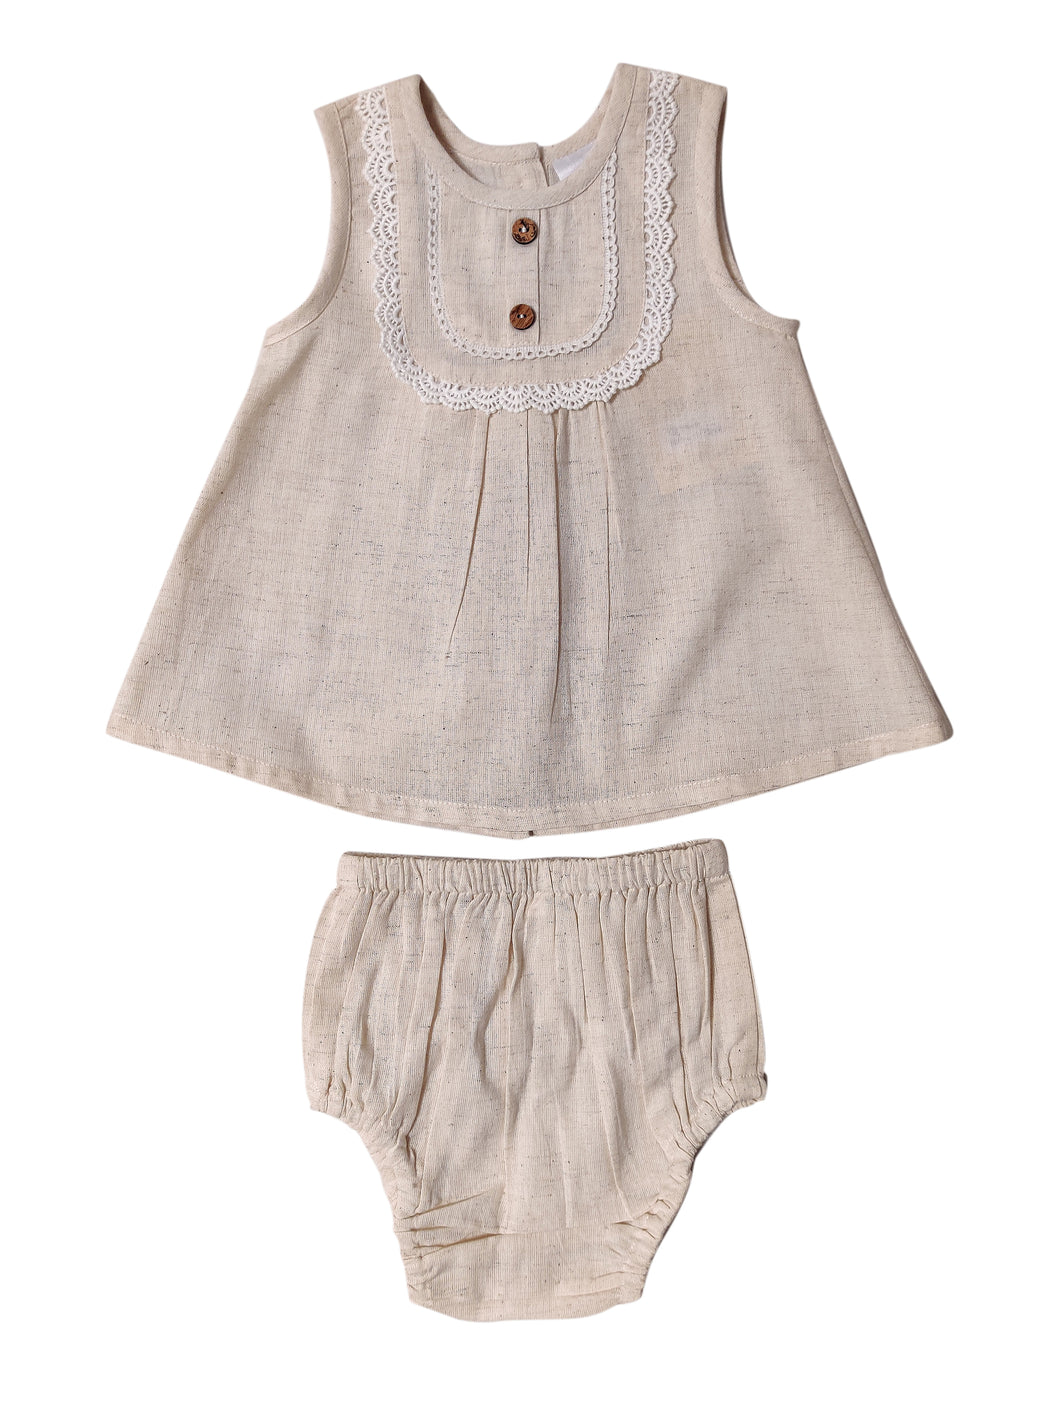 Ecru Tone on Tone Lace Detail Infant Dress and Bloomer Set